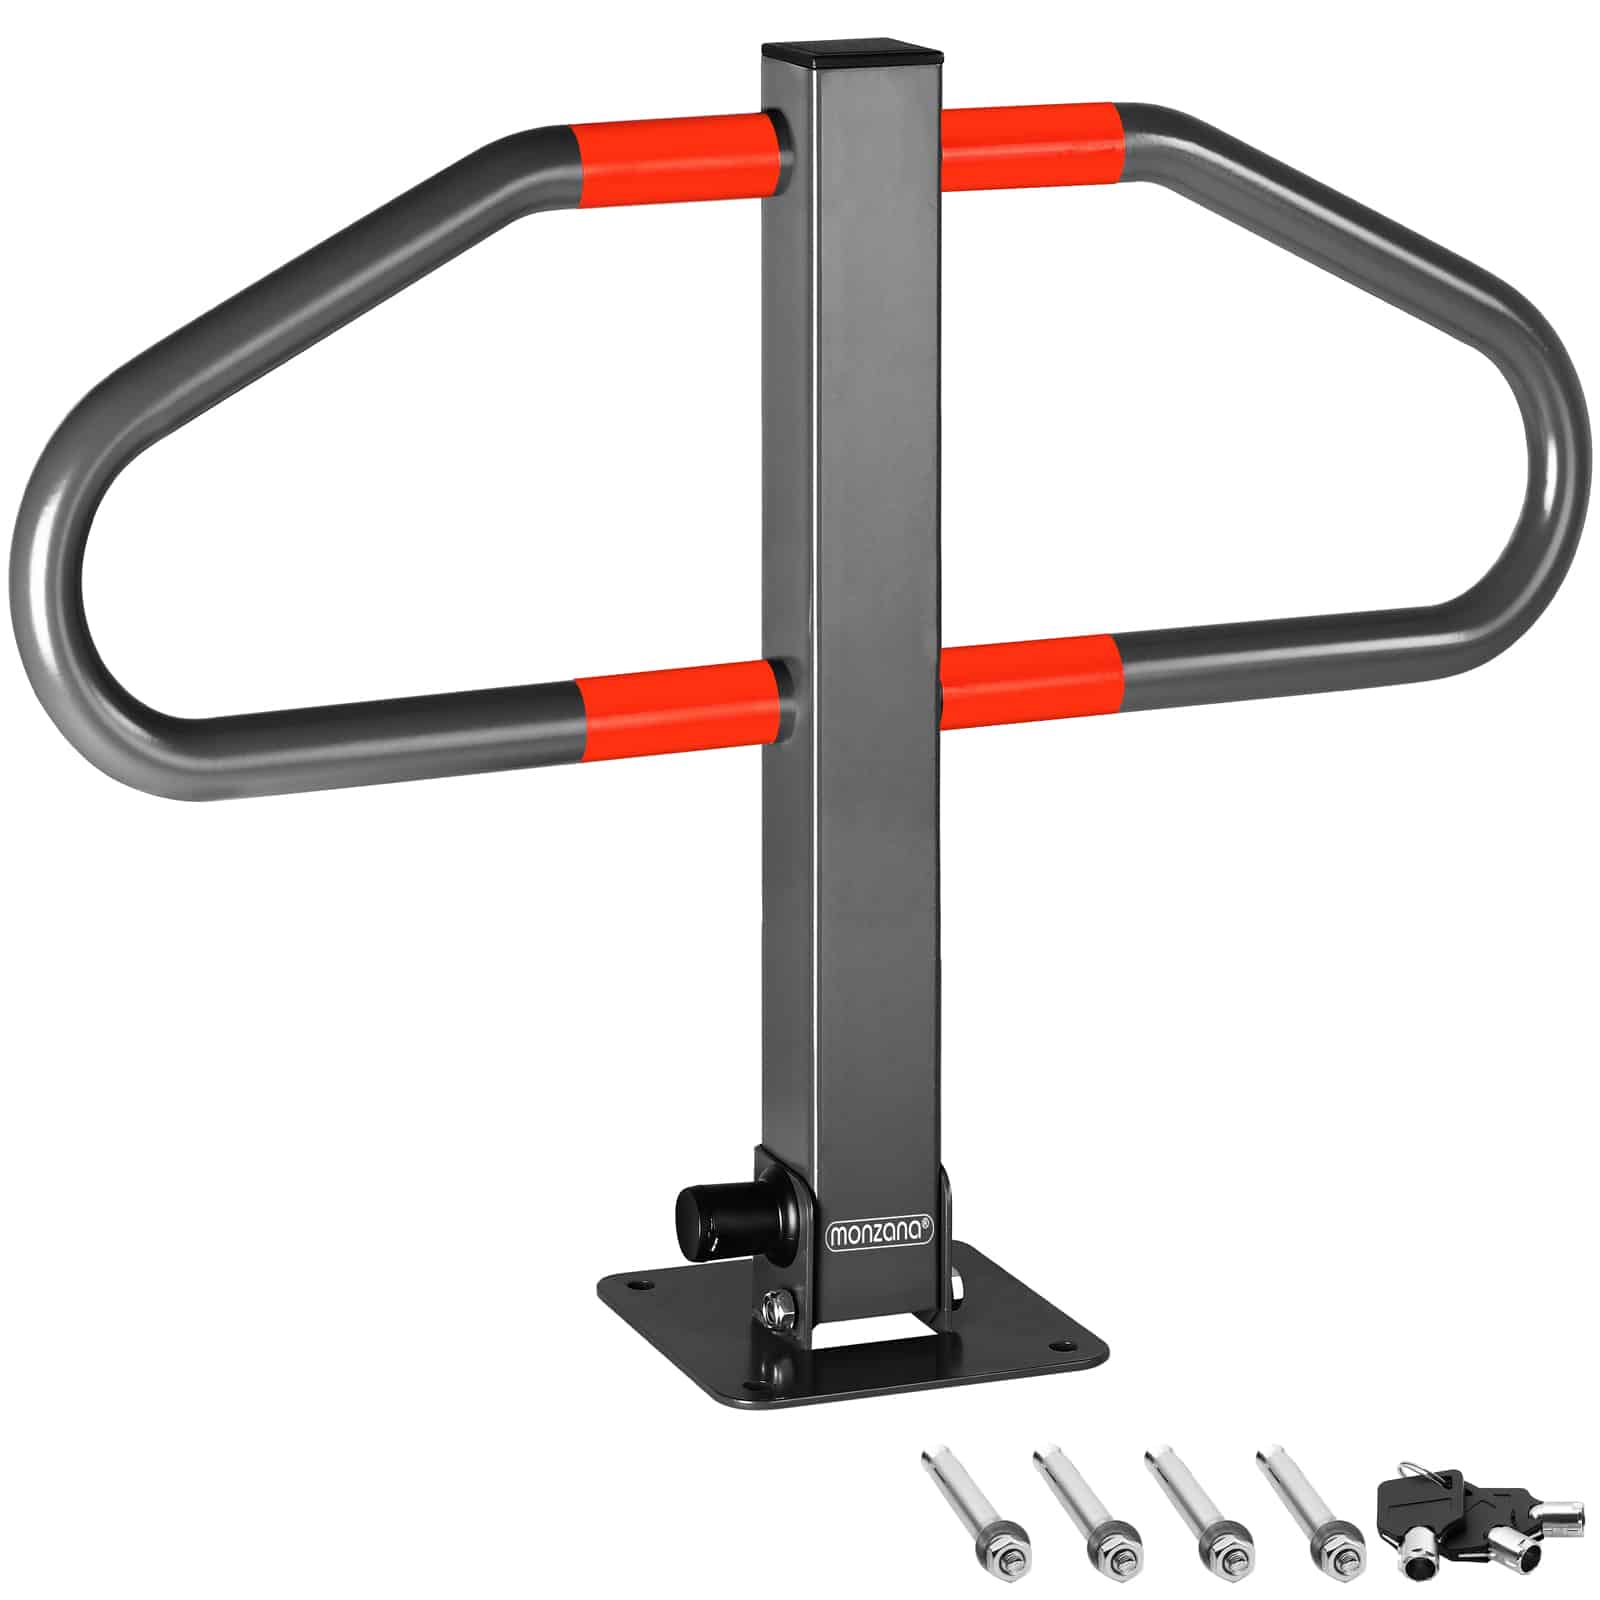 Parkeringsbarriere 2 nøgler foldbar integreret lås stål robust parkeringsstolpe